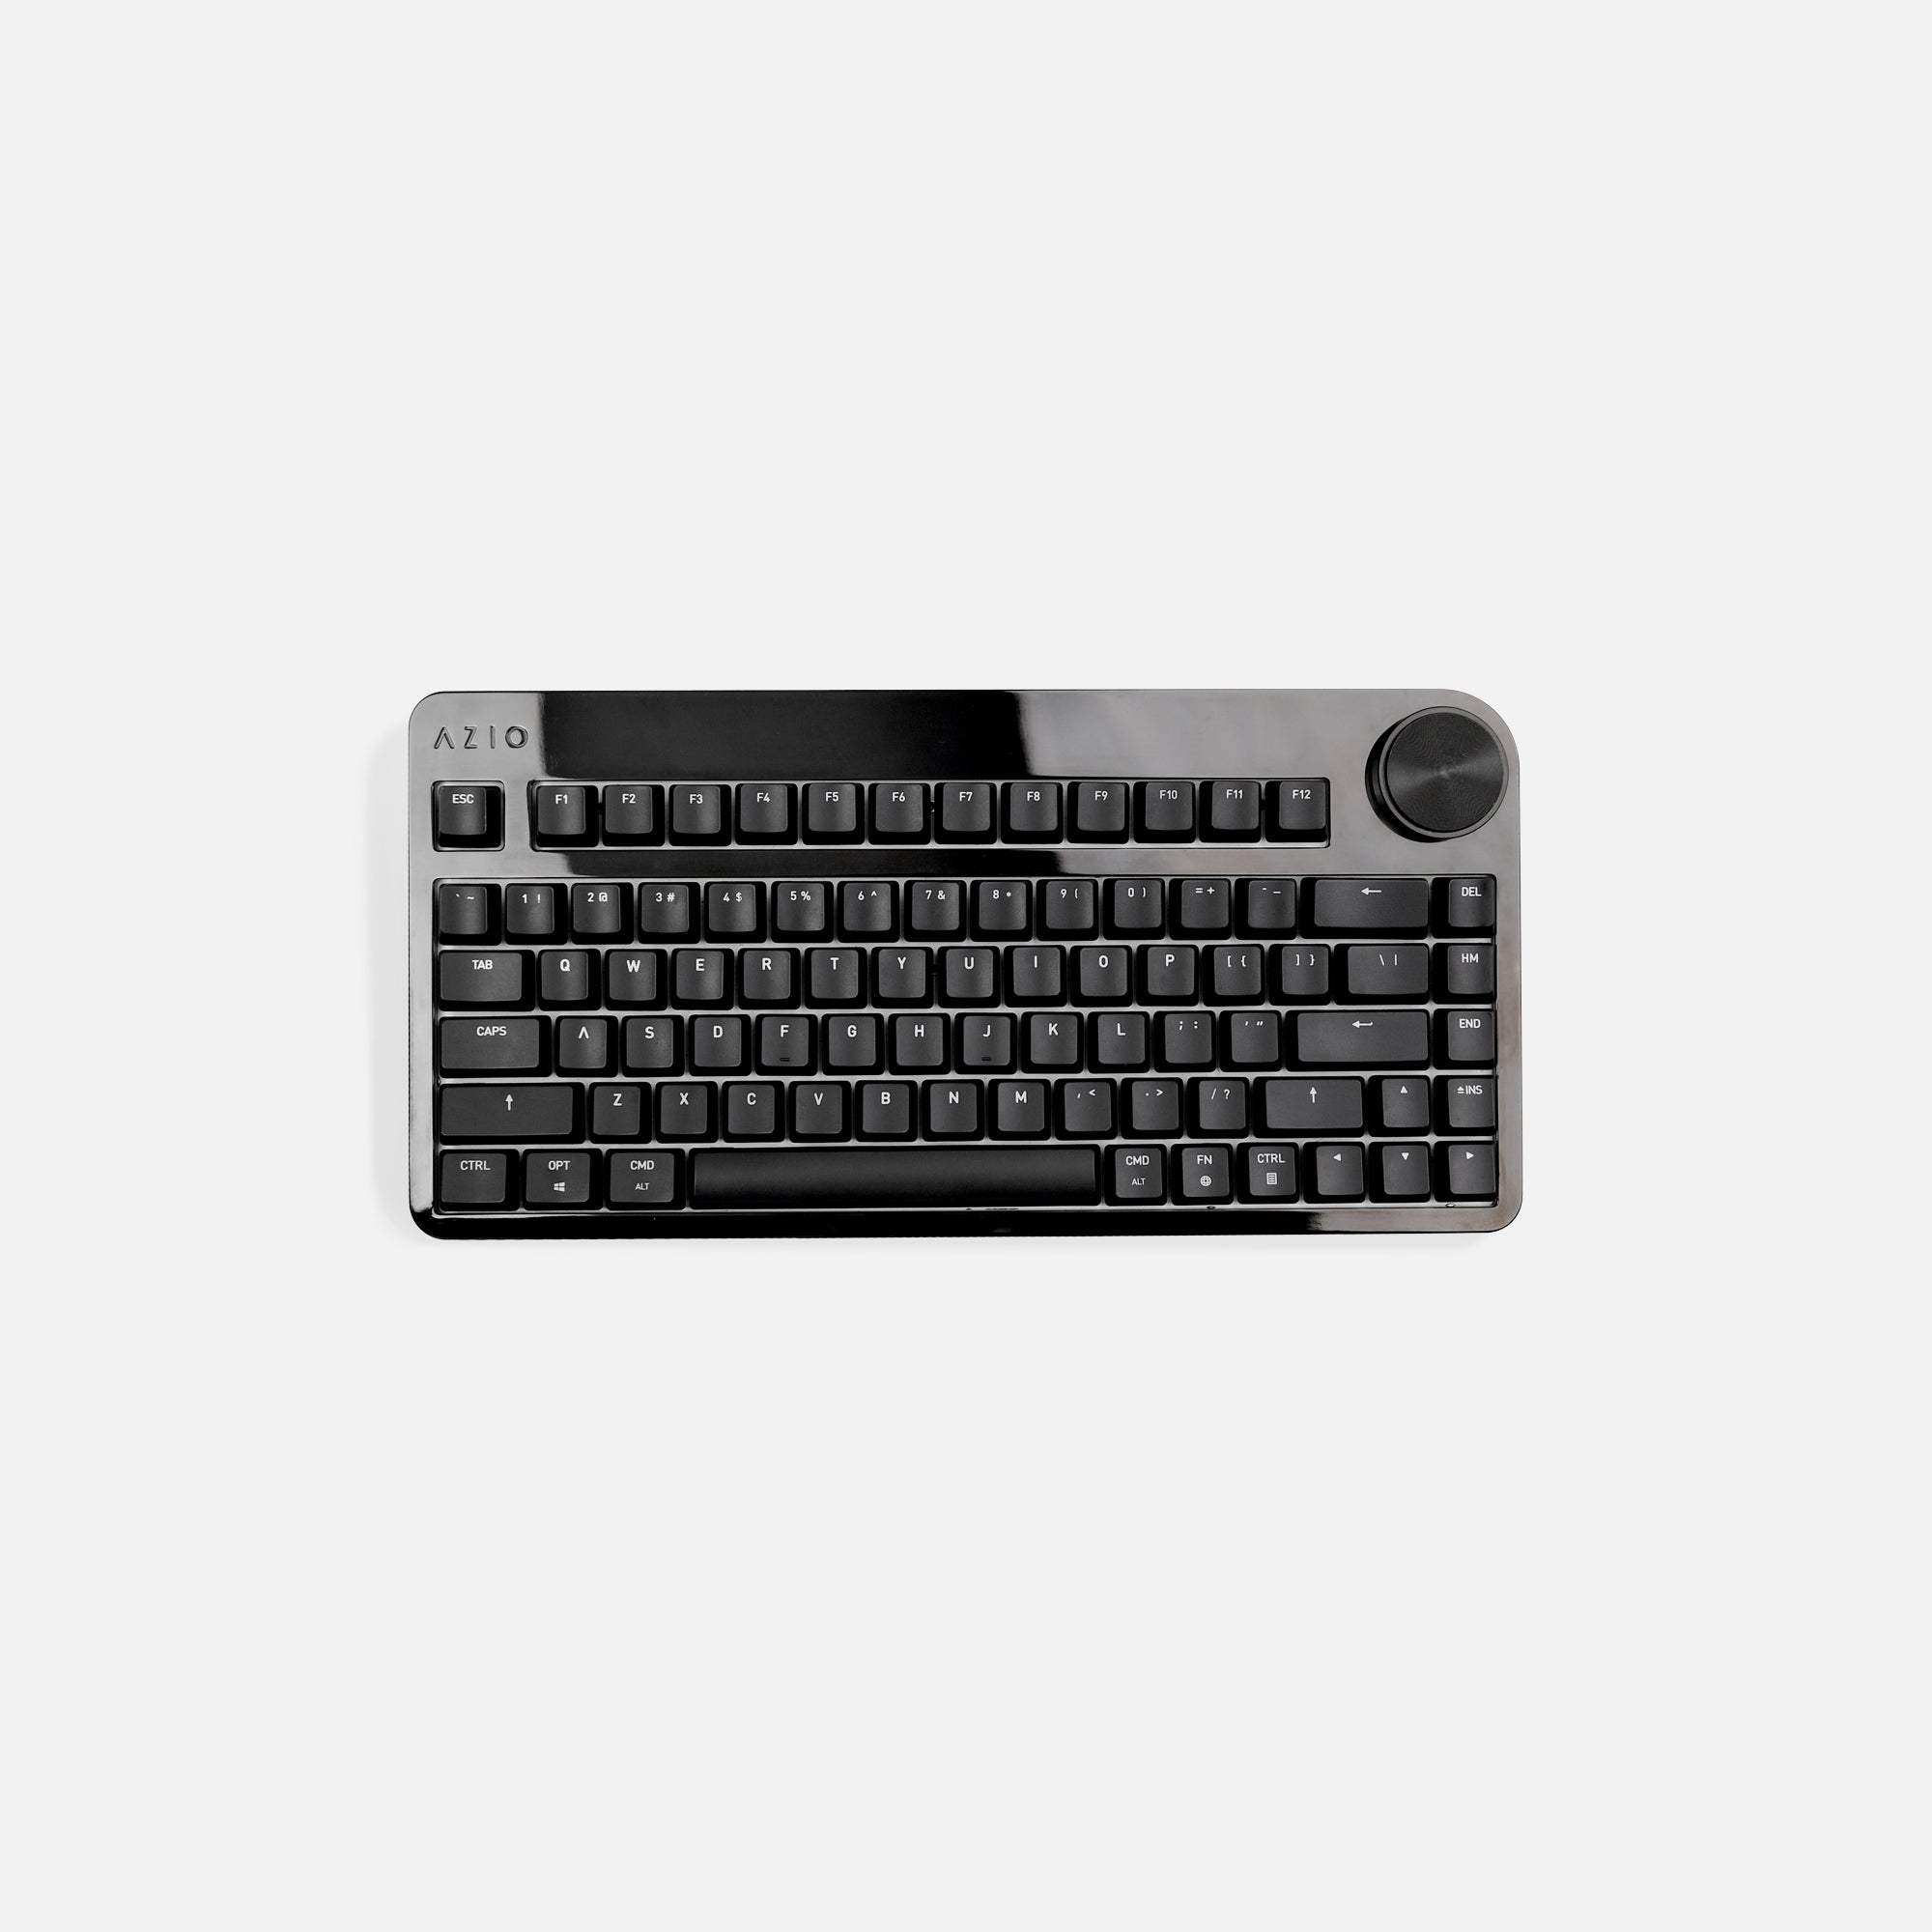 Drahtlose Tera75-Tastatur